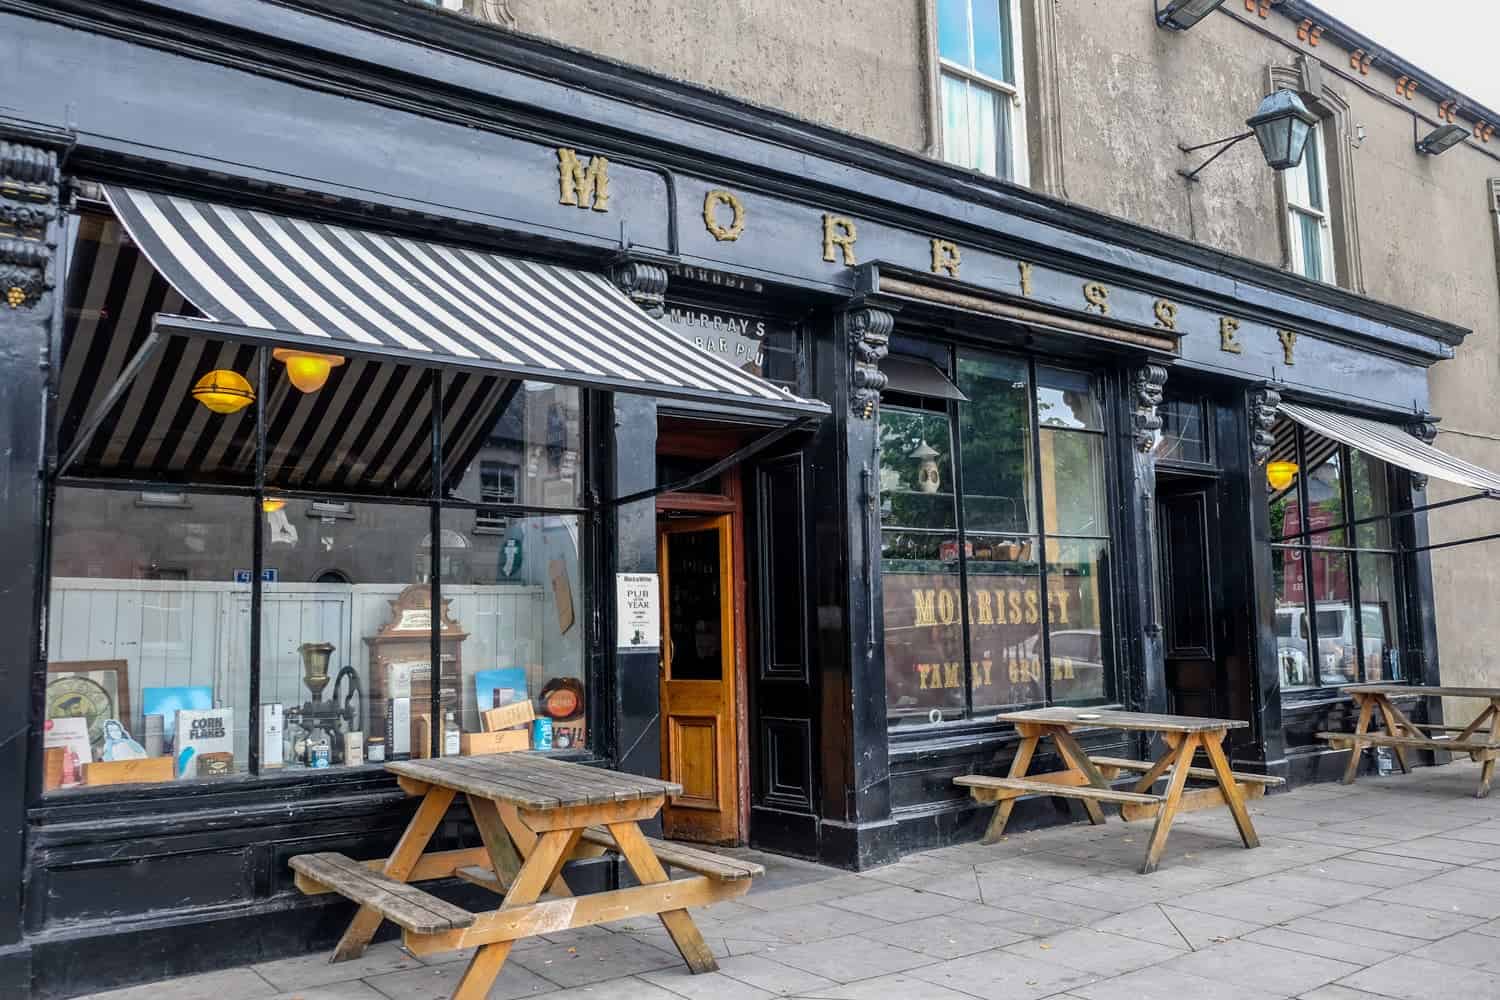 Morrissey’s oldest pub in Ireland, Ireland's Ancient East